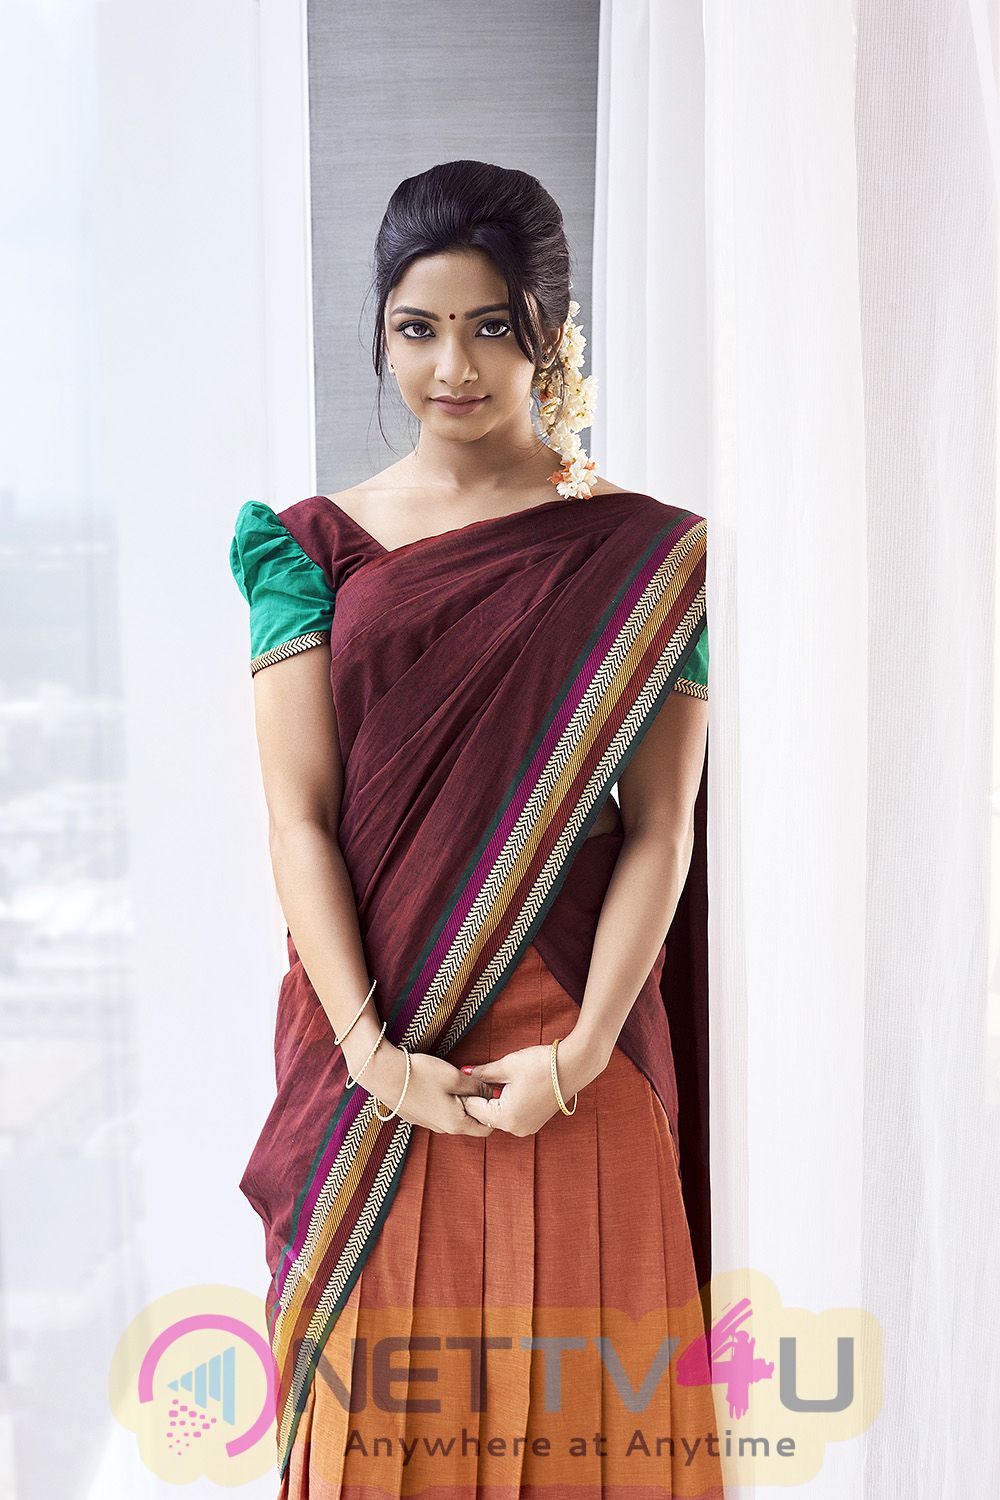 Actress Kamna Good Looking Stills Tamil Gallery